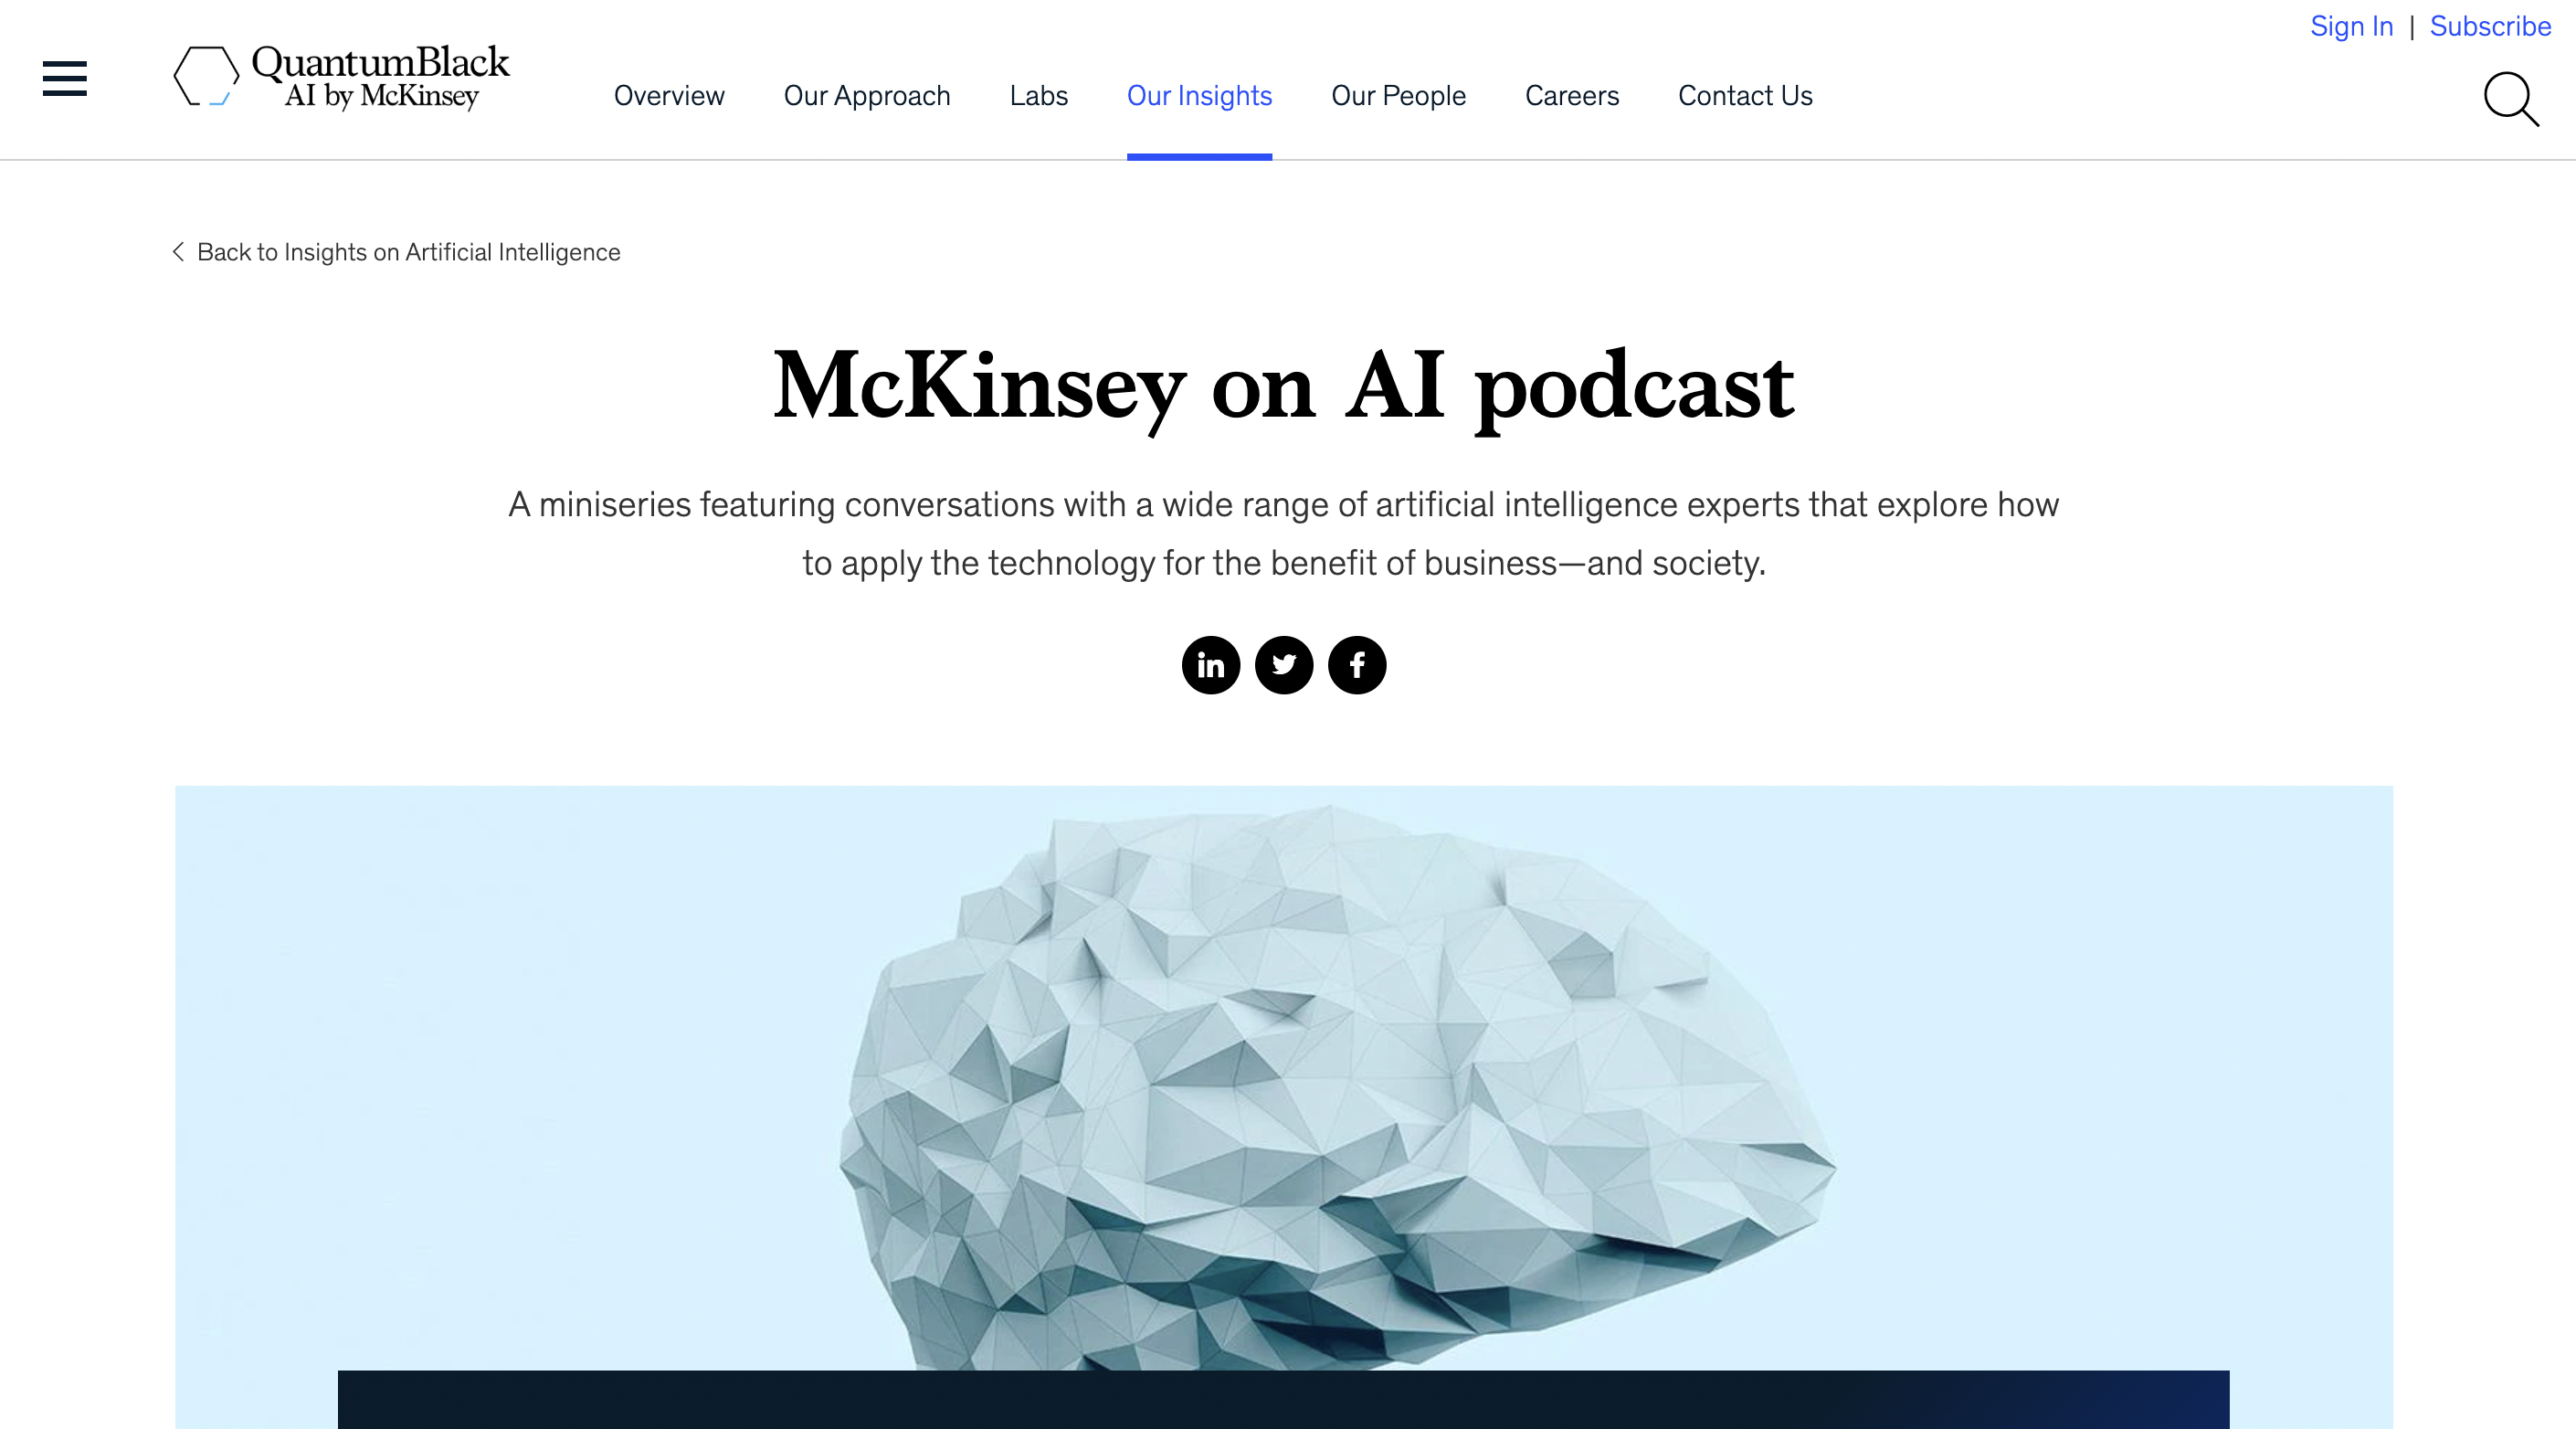 McKinsey on AI podcast